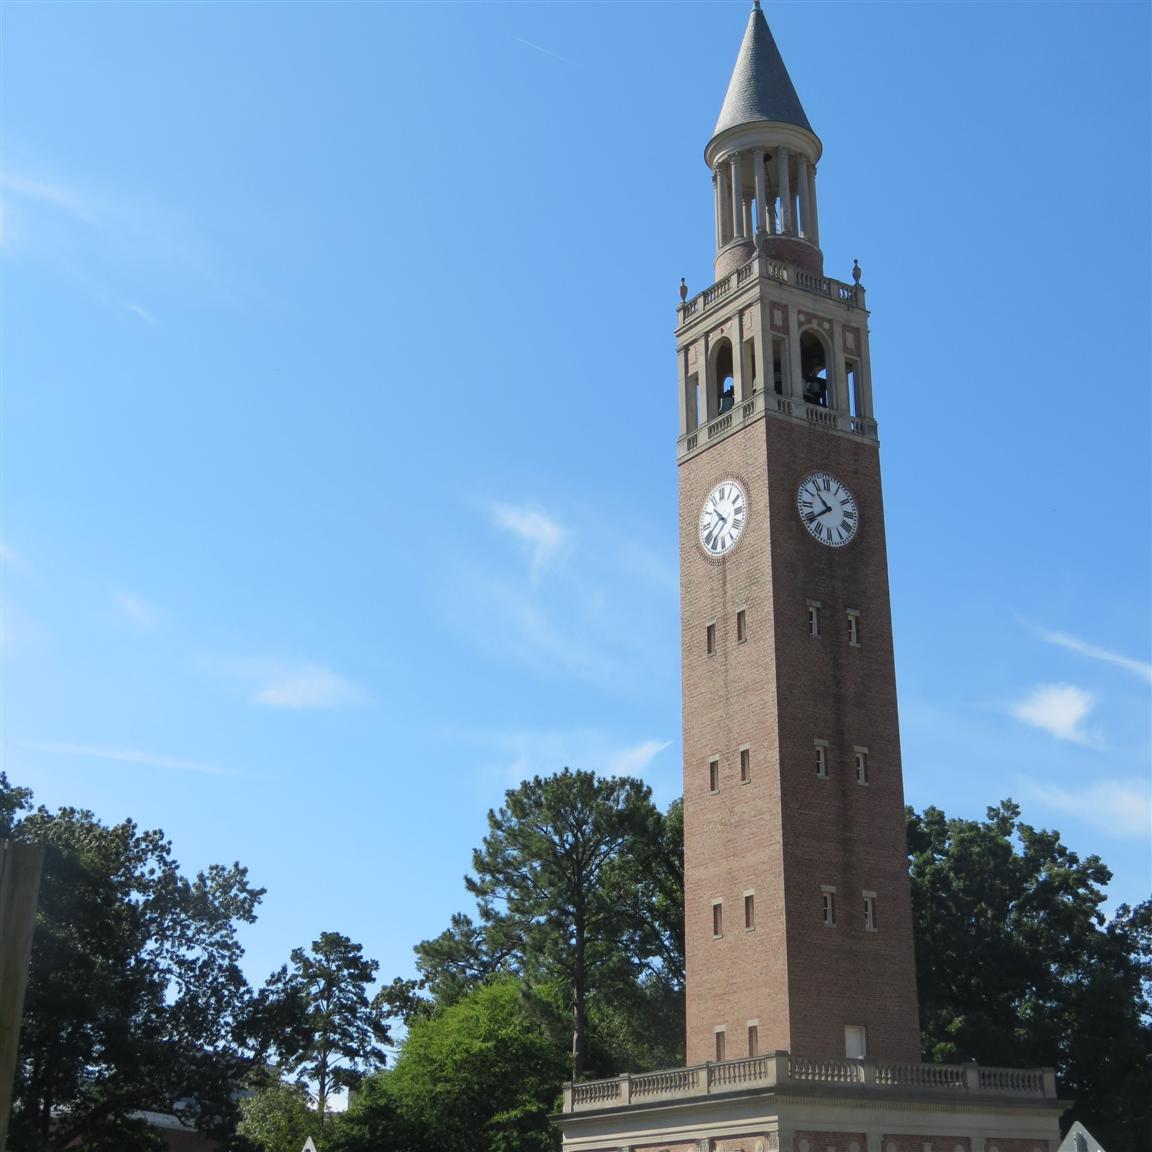 University of North Carolina Bell Tower in Chapel Hill